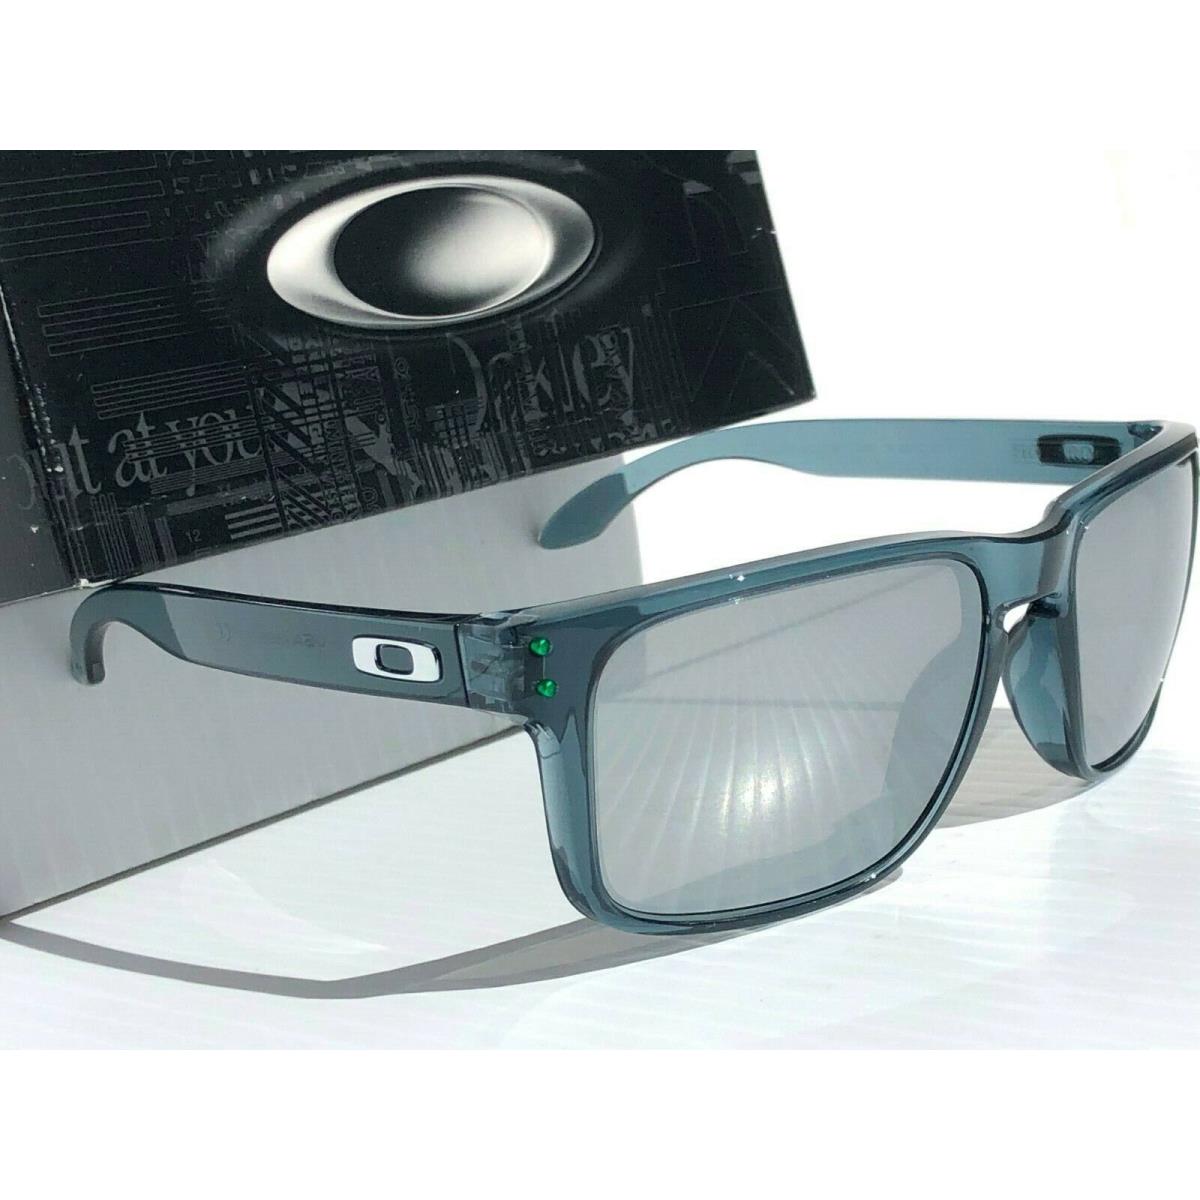 Oakley sunglasses Holbrook - Gray Frame, Silver Lens